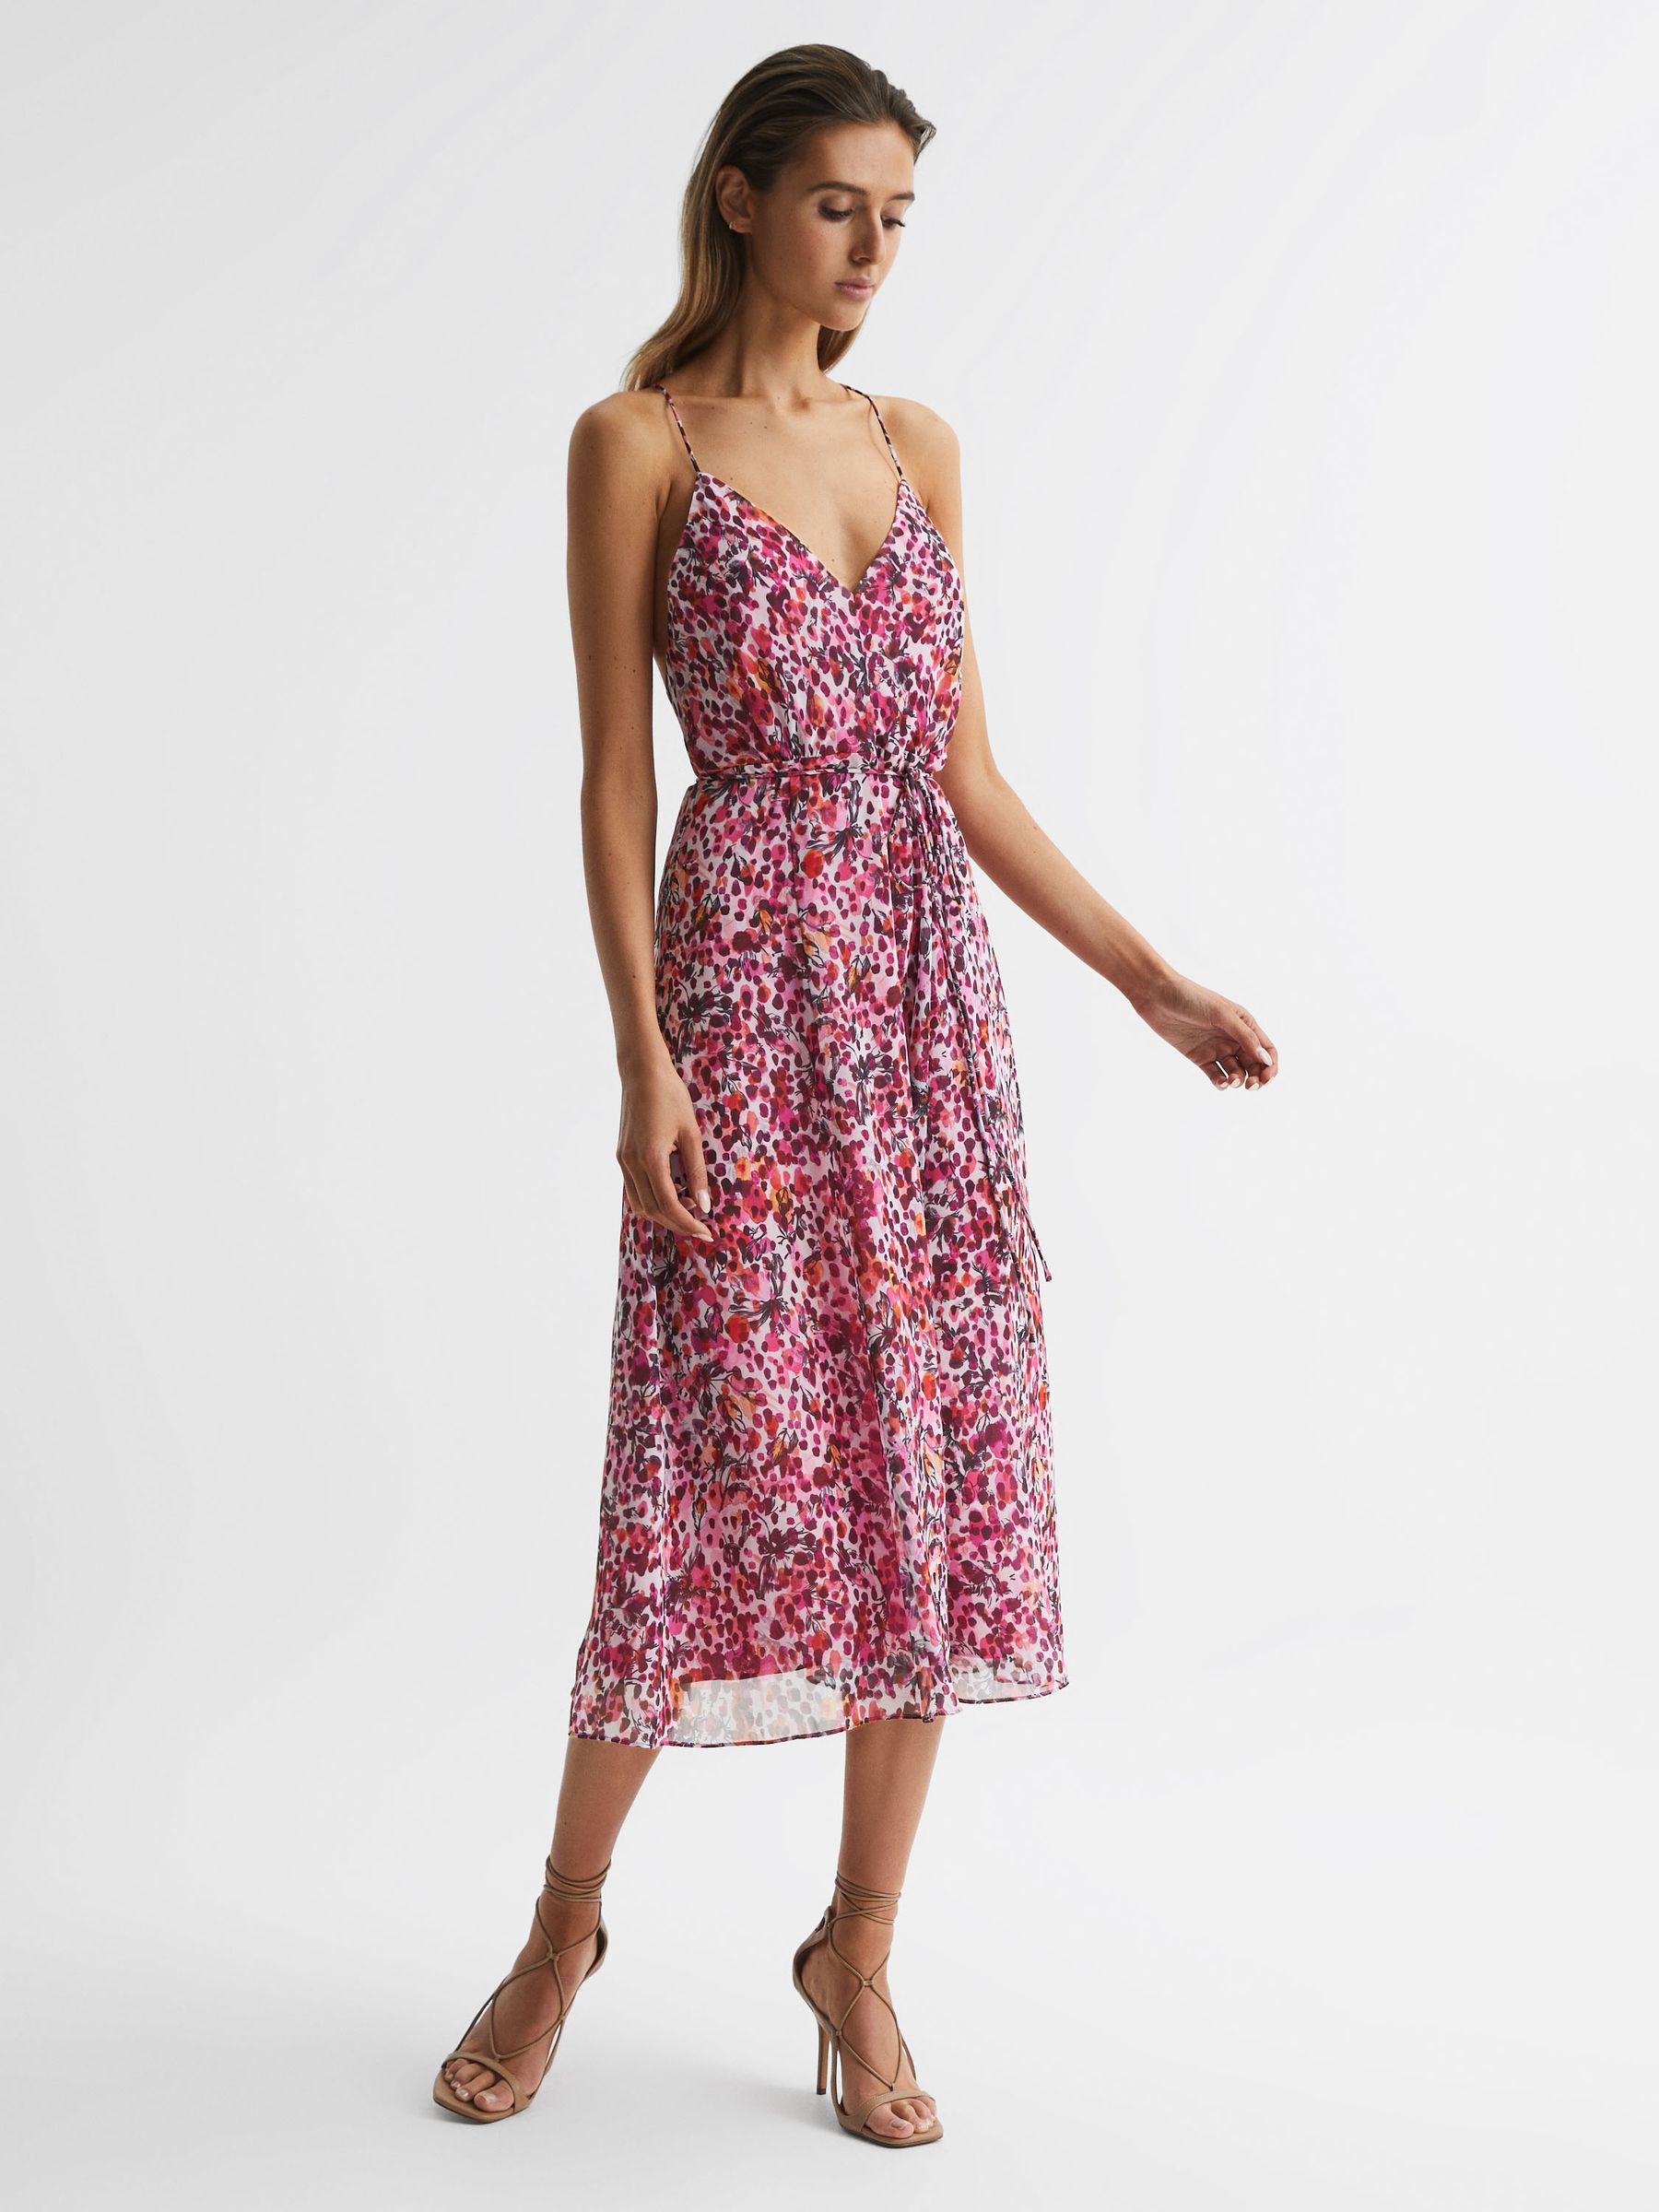 Reiss Pippa Floral Printed Midi Dress | REISS Australia